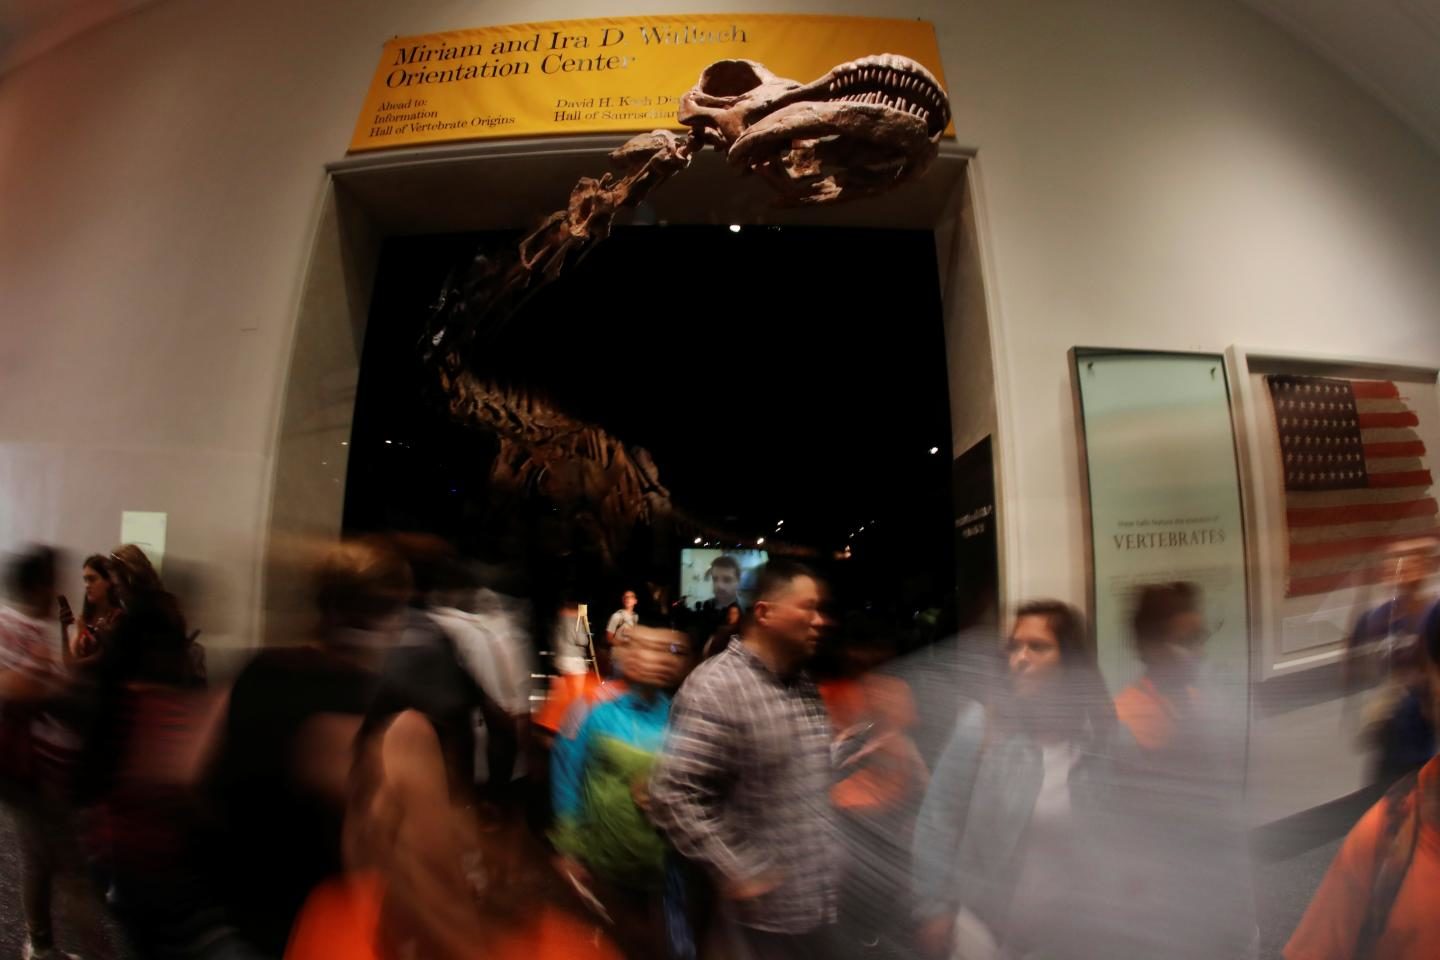 Patagotitan was named the Biggest Land Animal Ever Dinosaur